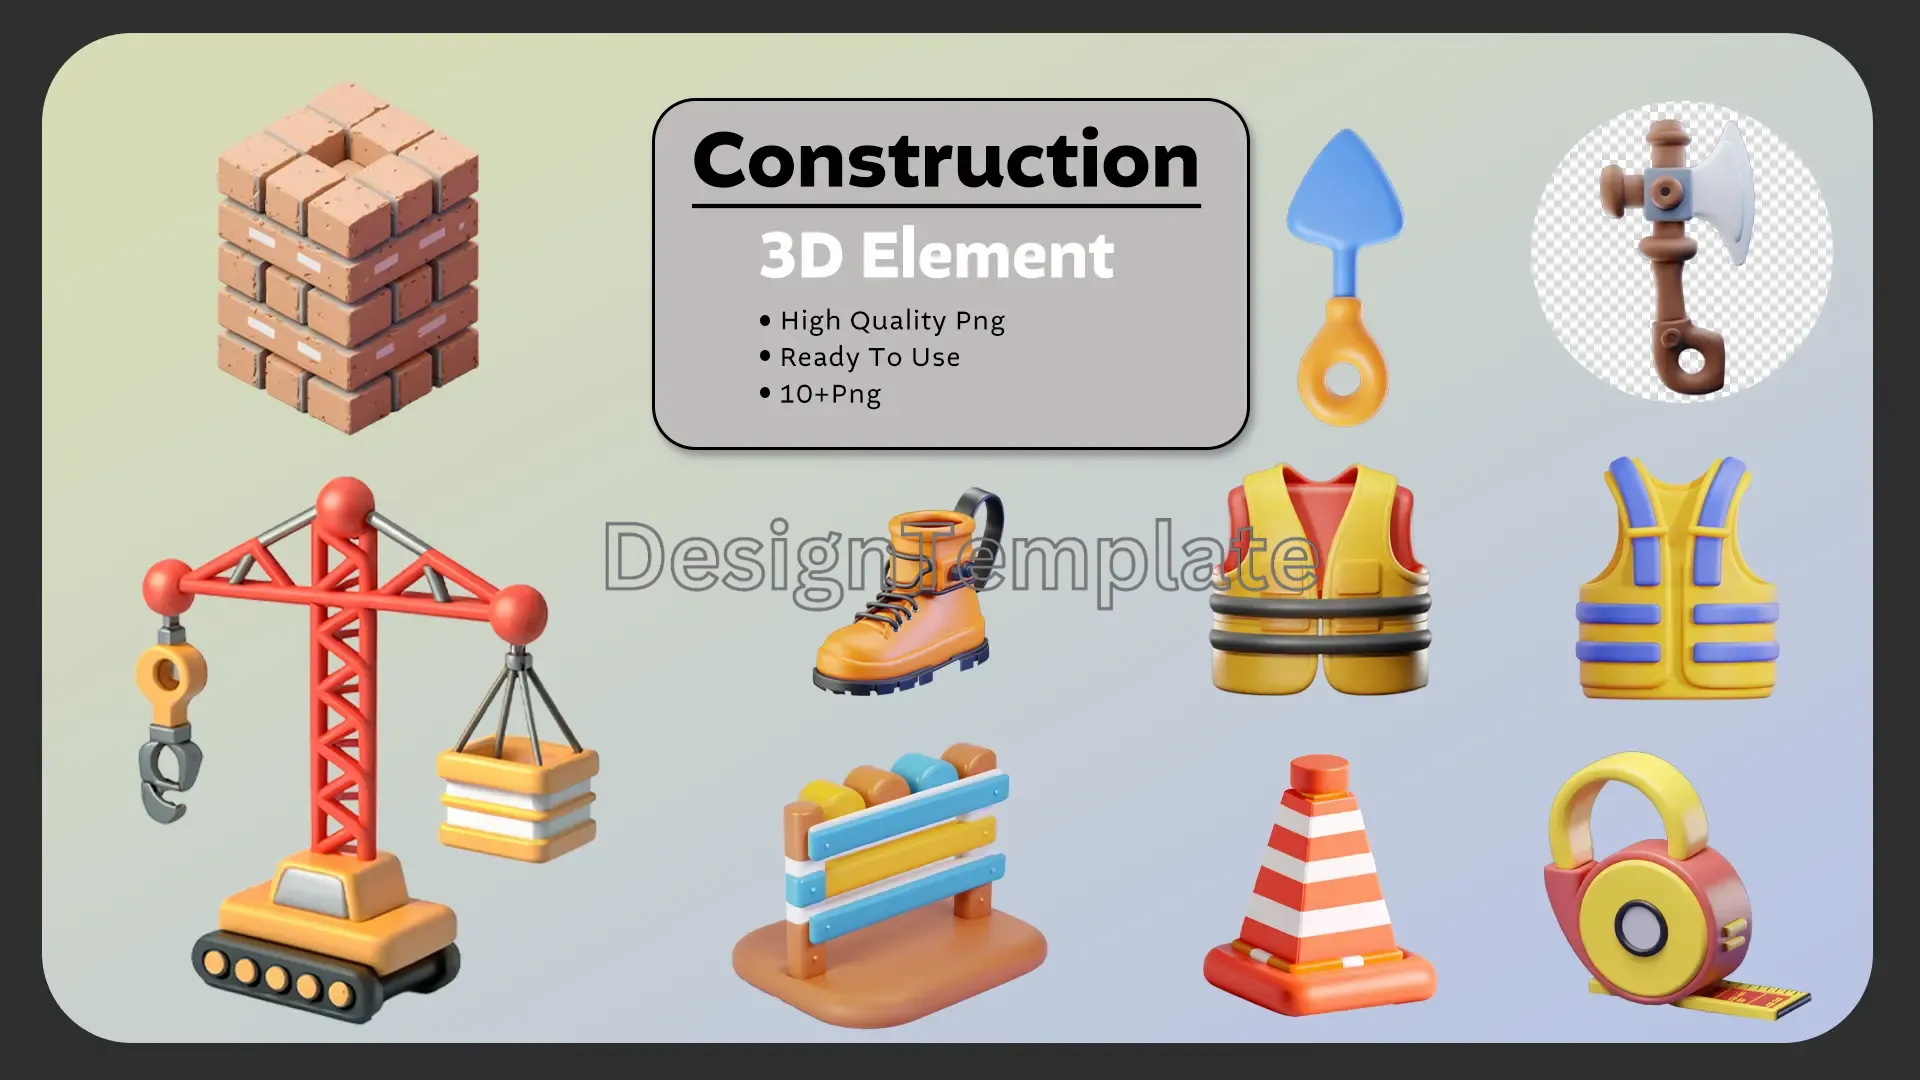 Builder's Toolbox Exquisite Construction 3D Elements Pack